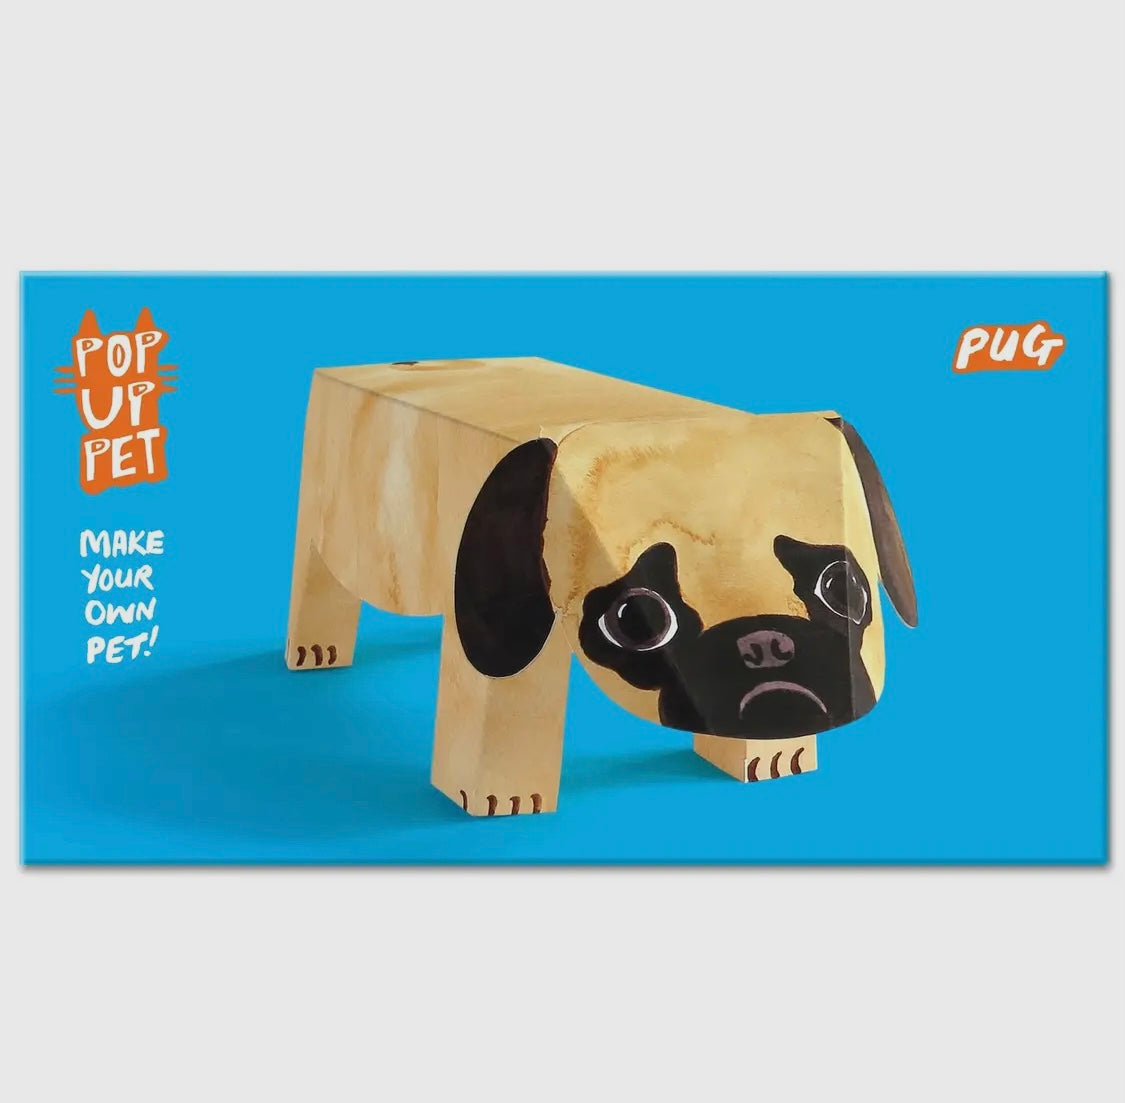 Pop Up Pet - Pug - Paper Pet Gift